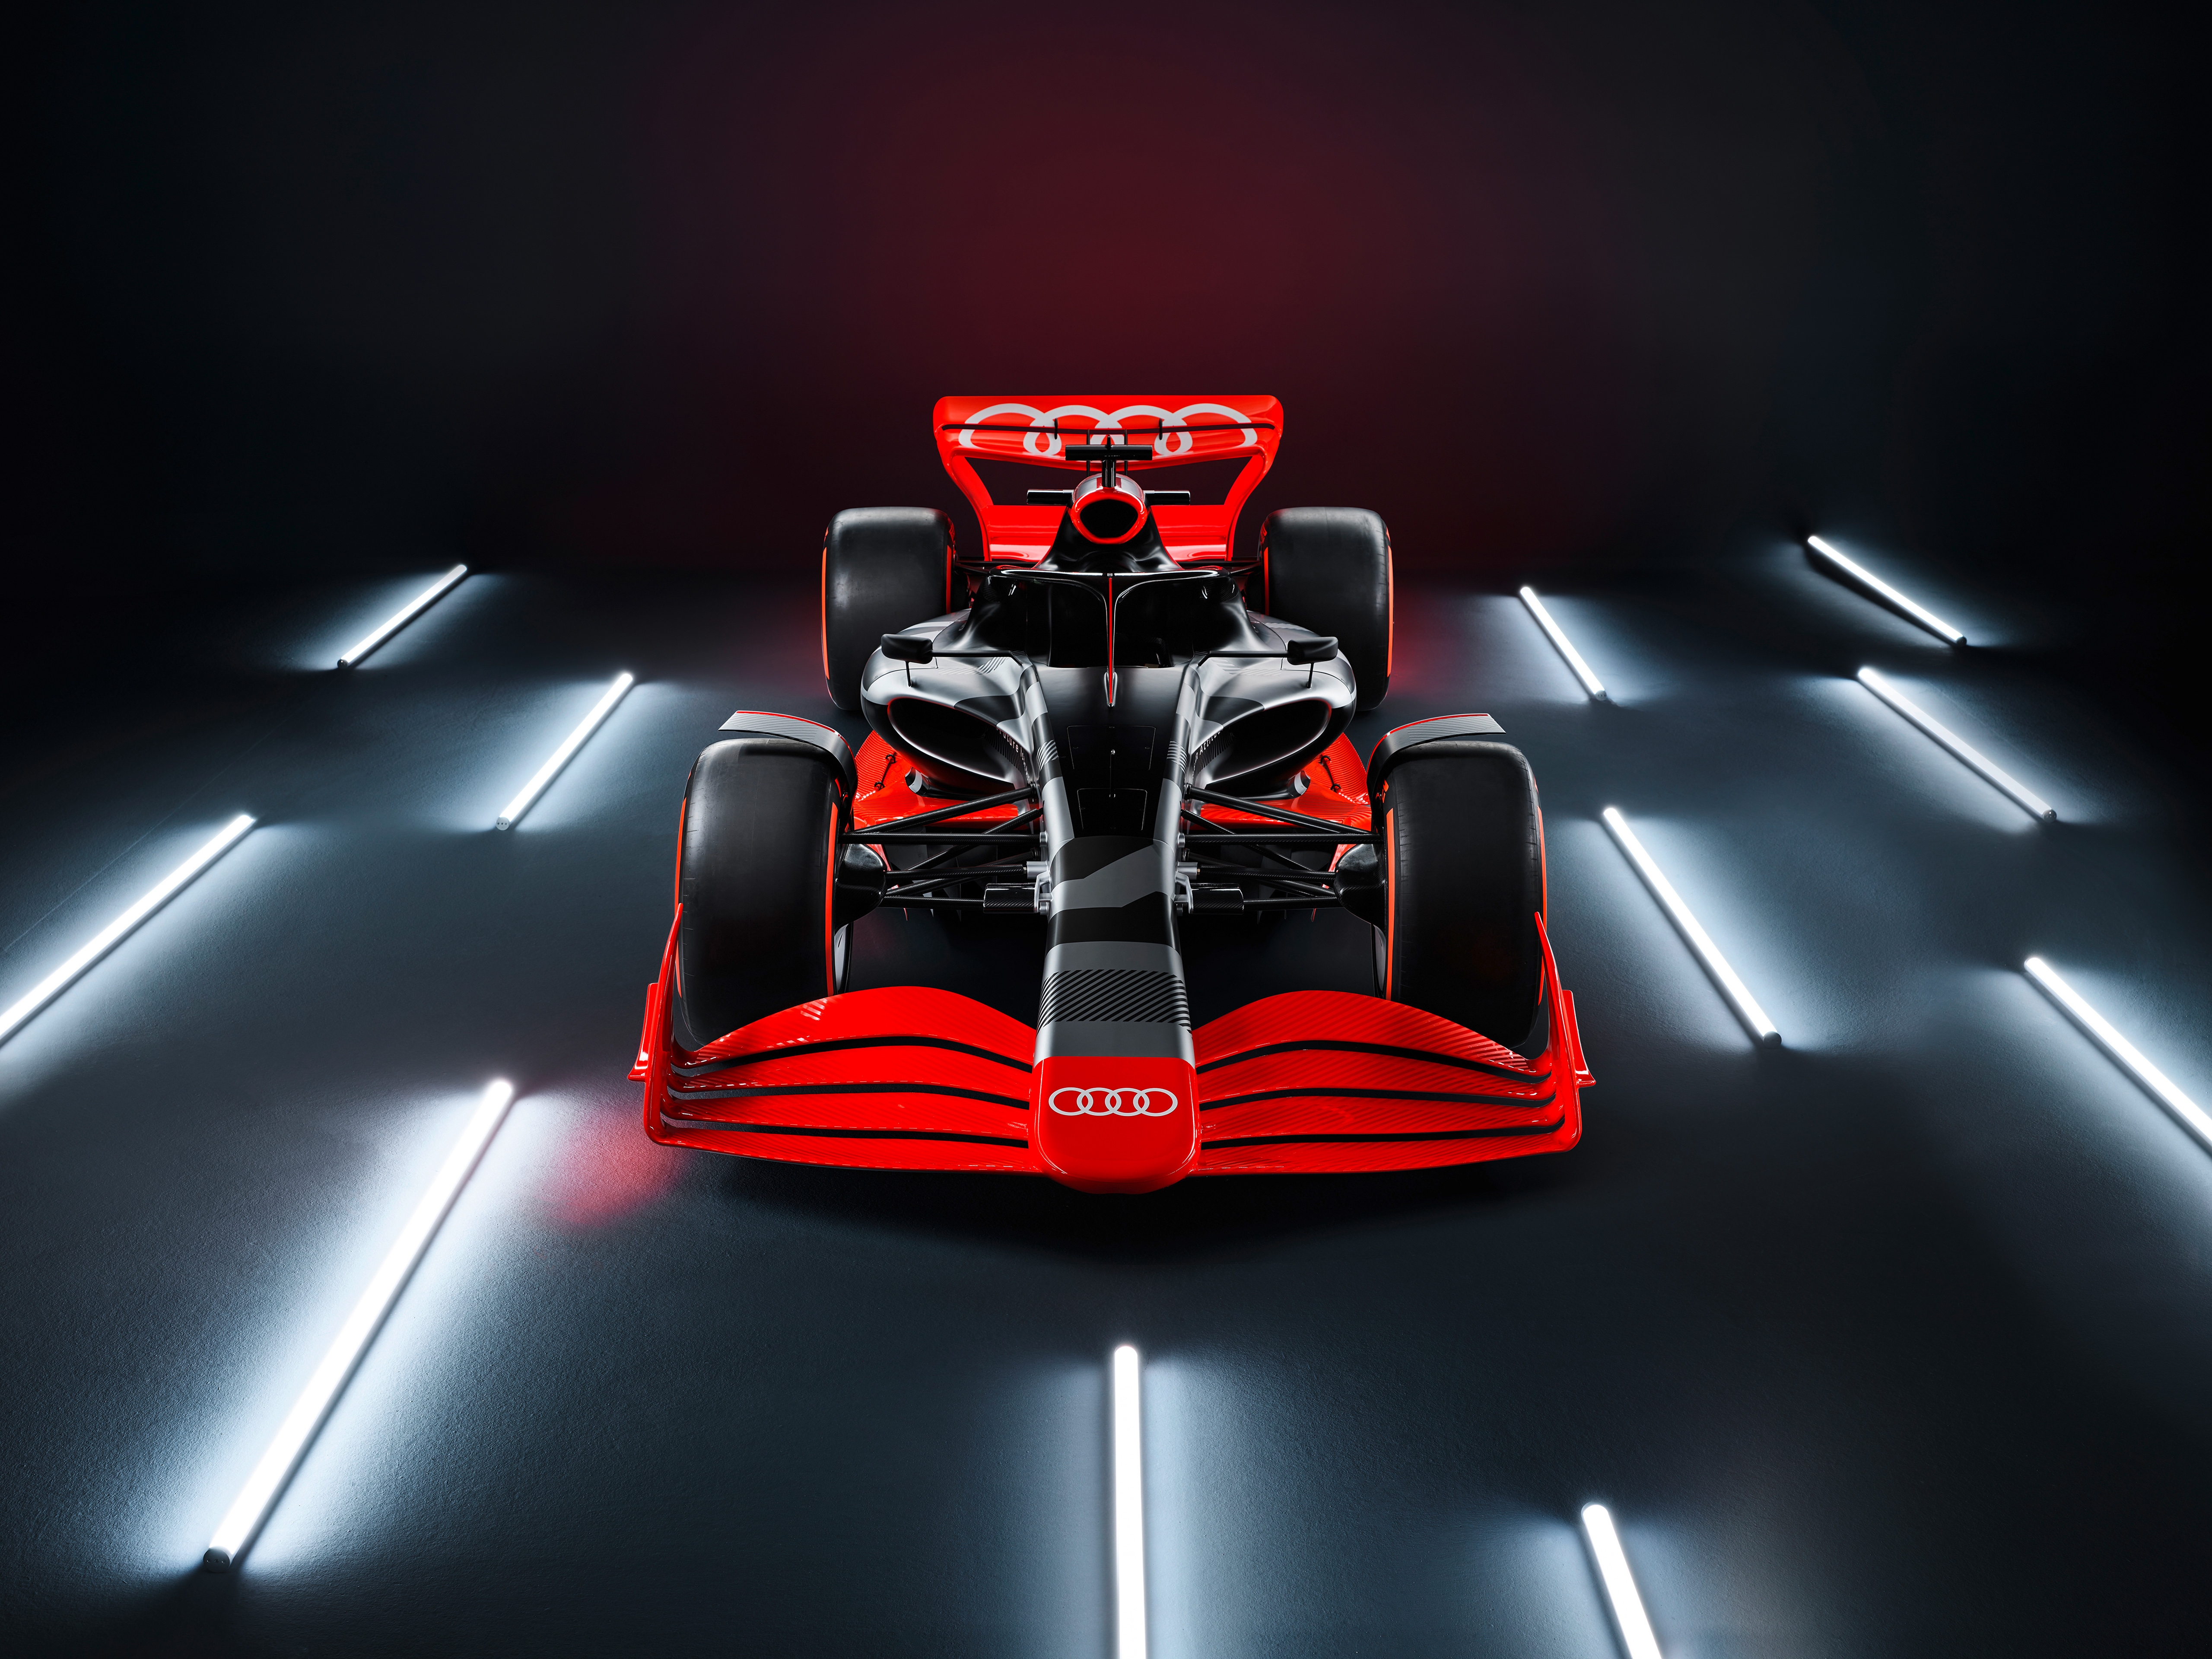 HD wallpaper, Formula E Racing Car, 5K, Audi F1 Launch Livery, 2022